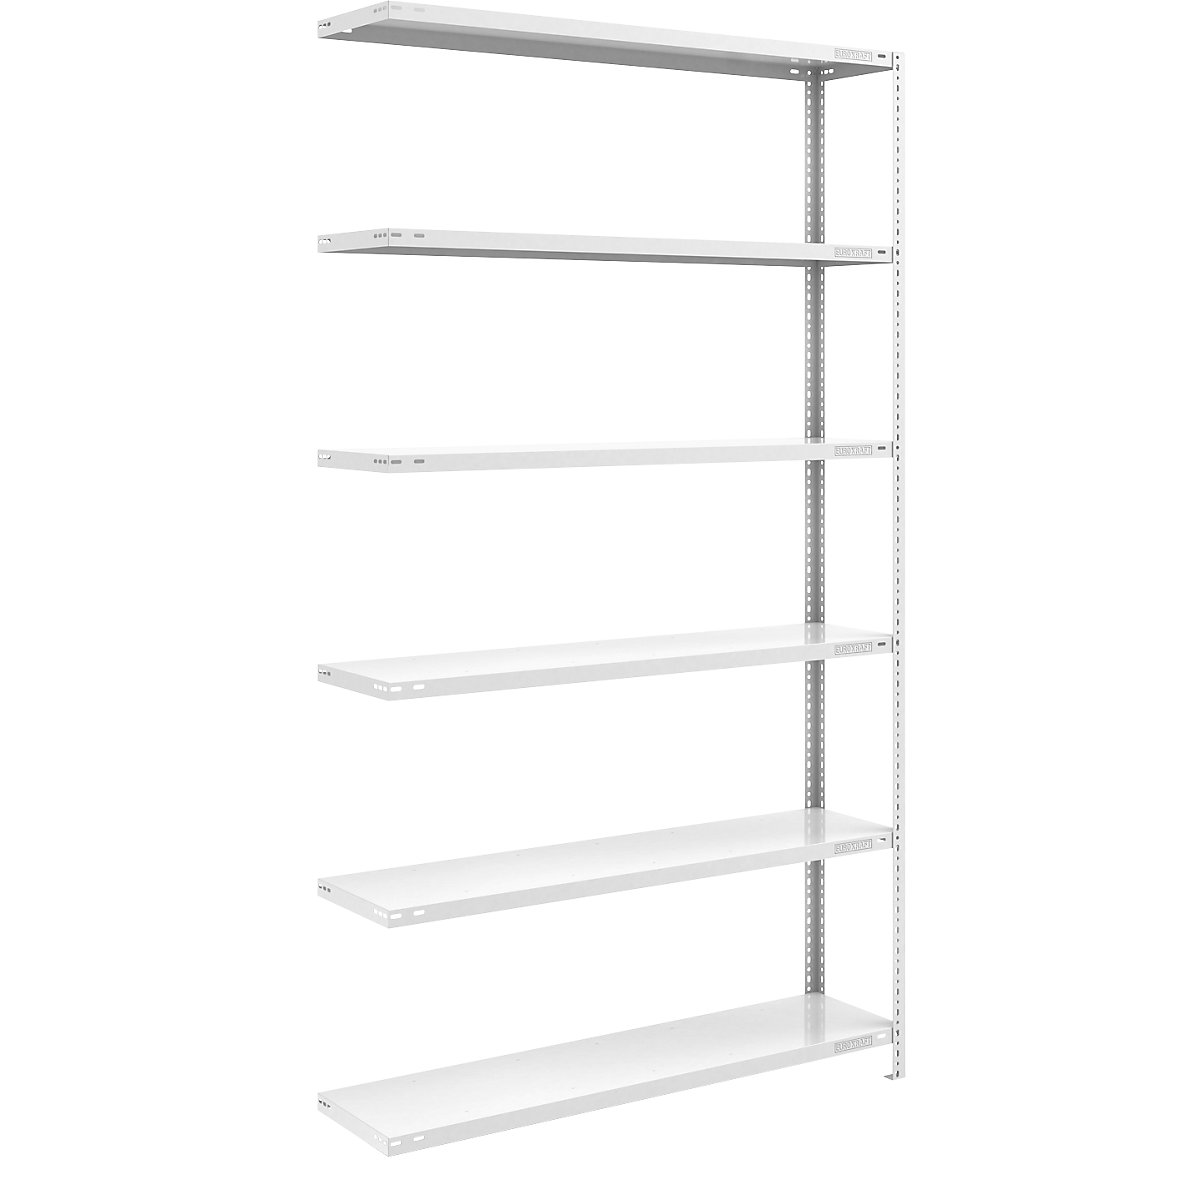 Bolt-together shelf unit, light duty, plastic coated – eurokraft pro, shelf unit height 2500 mm, shelf width 1300 mm, depth 400 mm, extension shelf unit-10